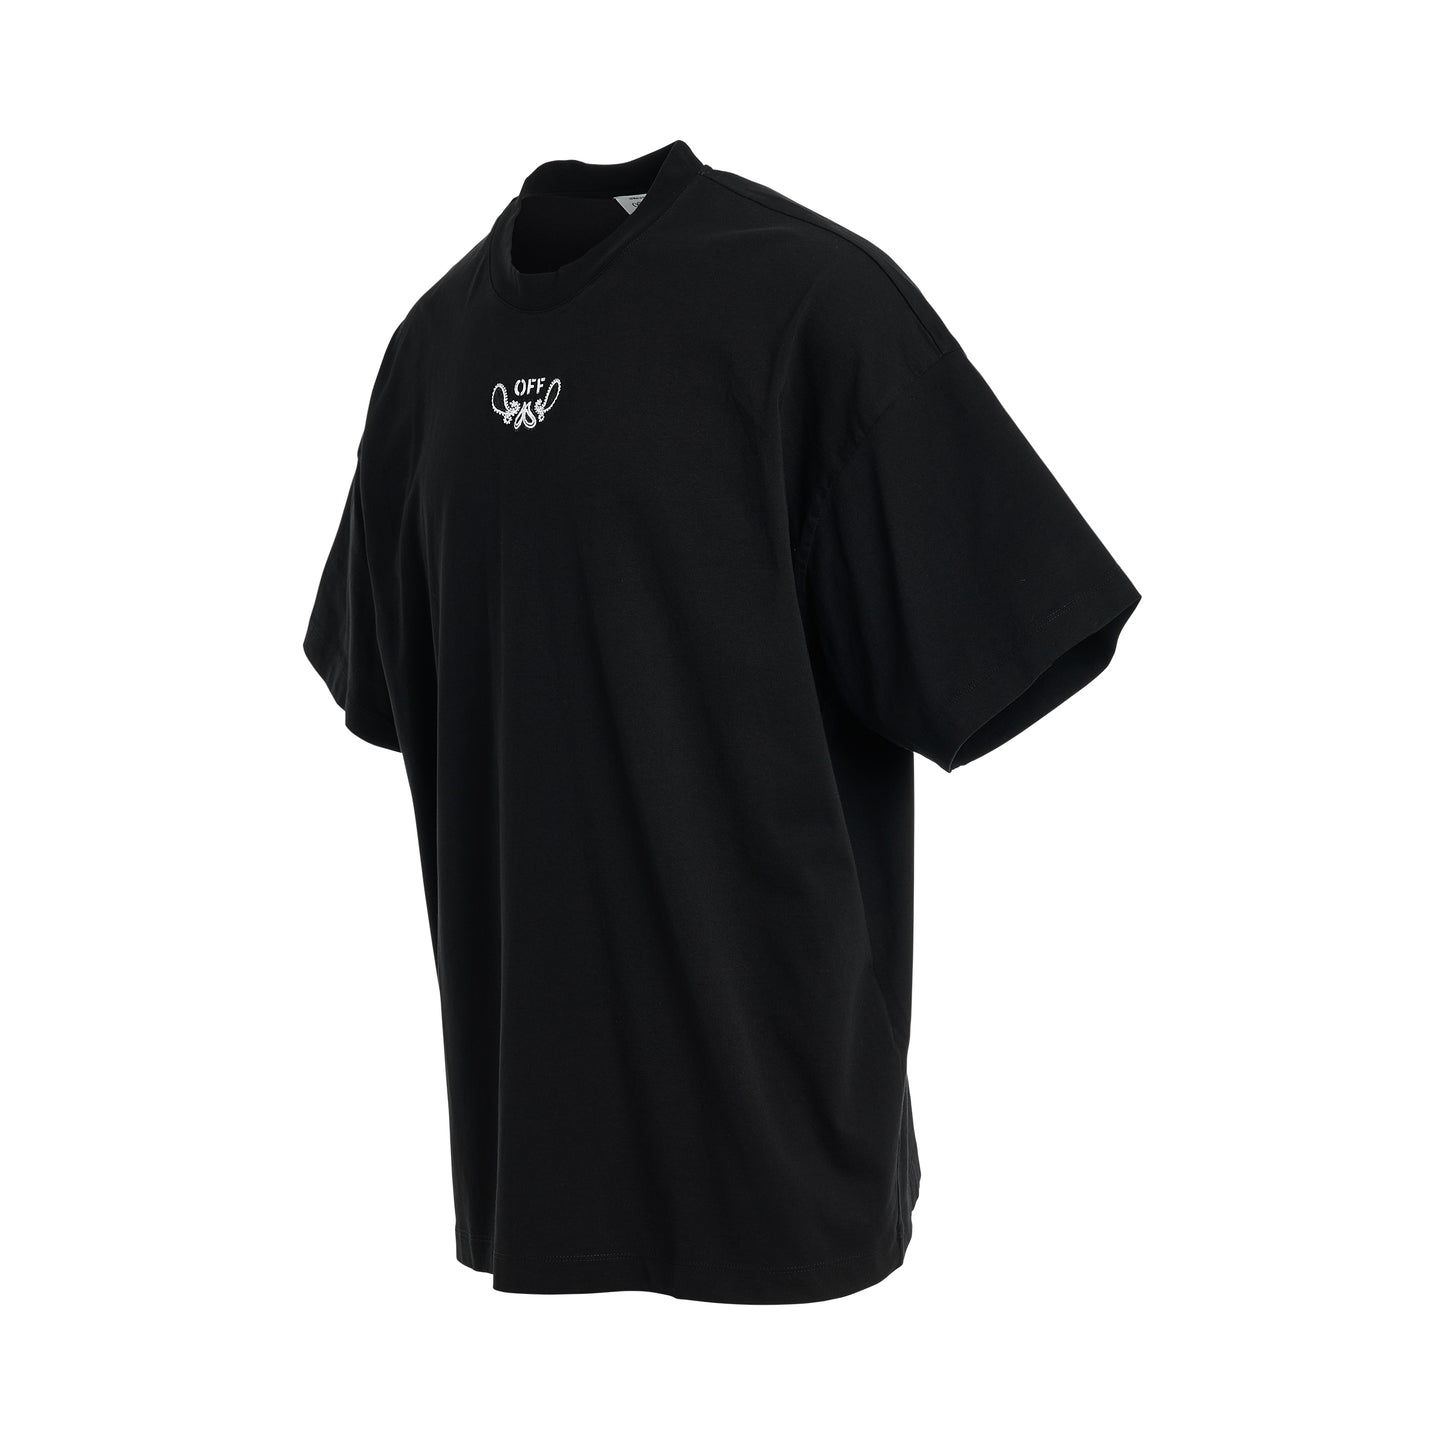 Bandana Half Arrow Oversized T-Shirt in Black/White